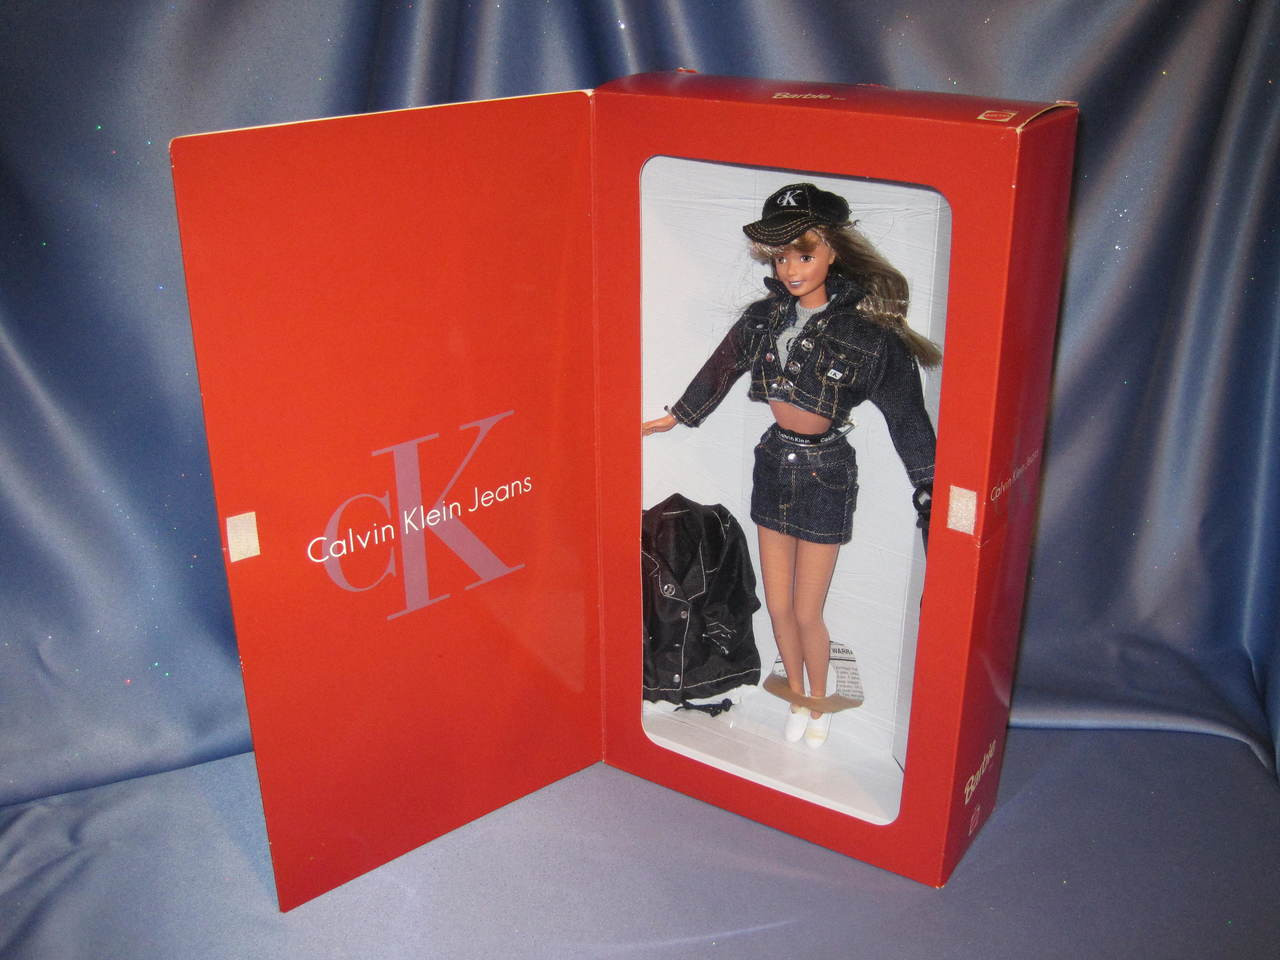 Barbie - Calvin Klein Jeans by Mattel. - Now and Then Galleria LLC